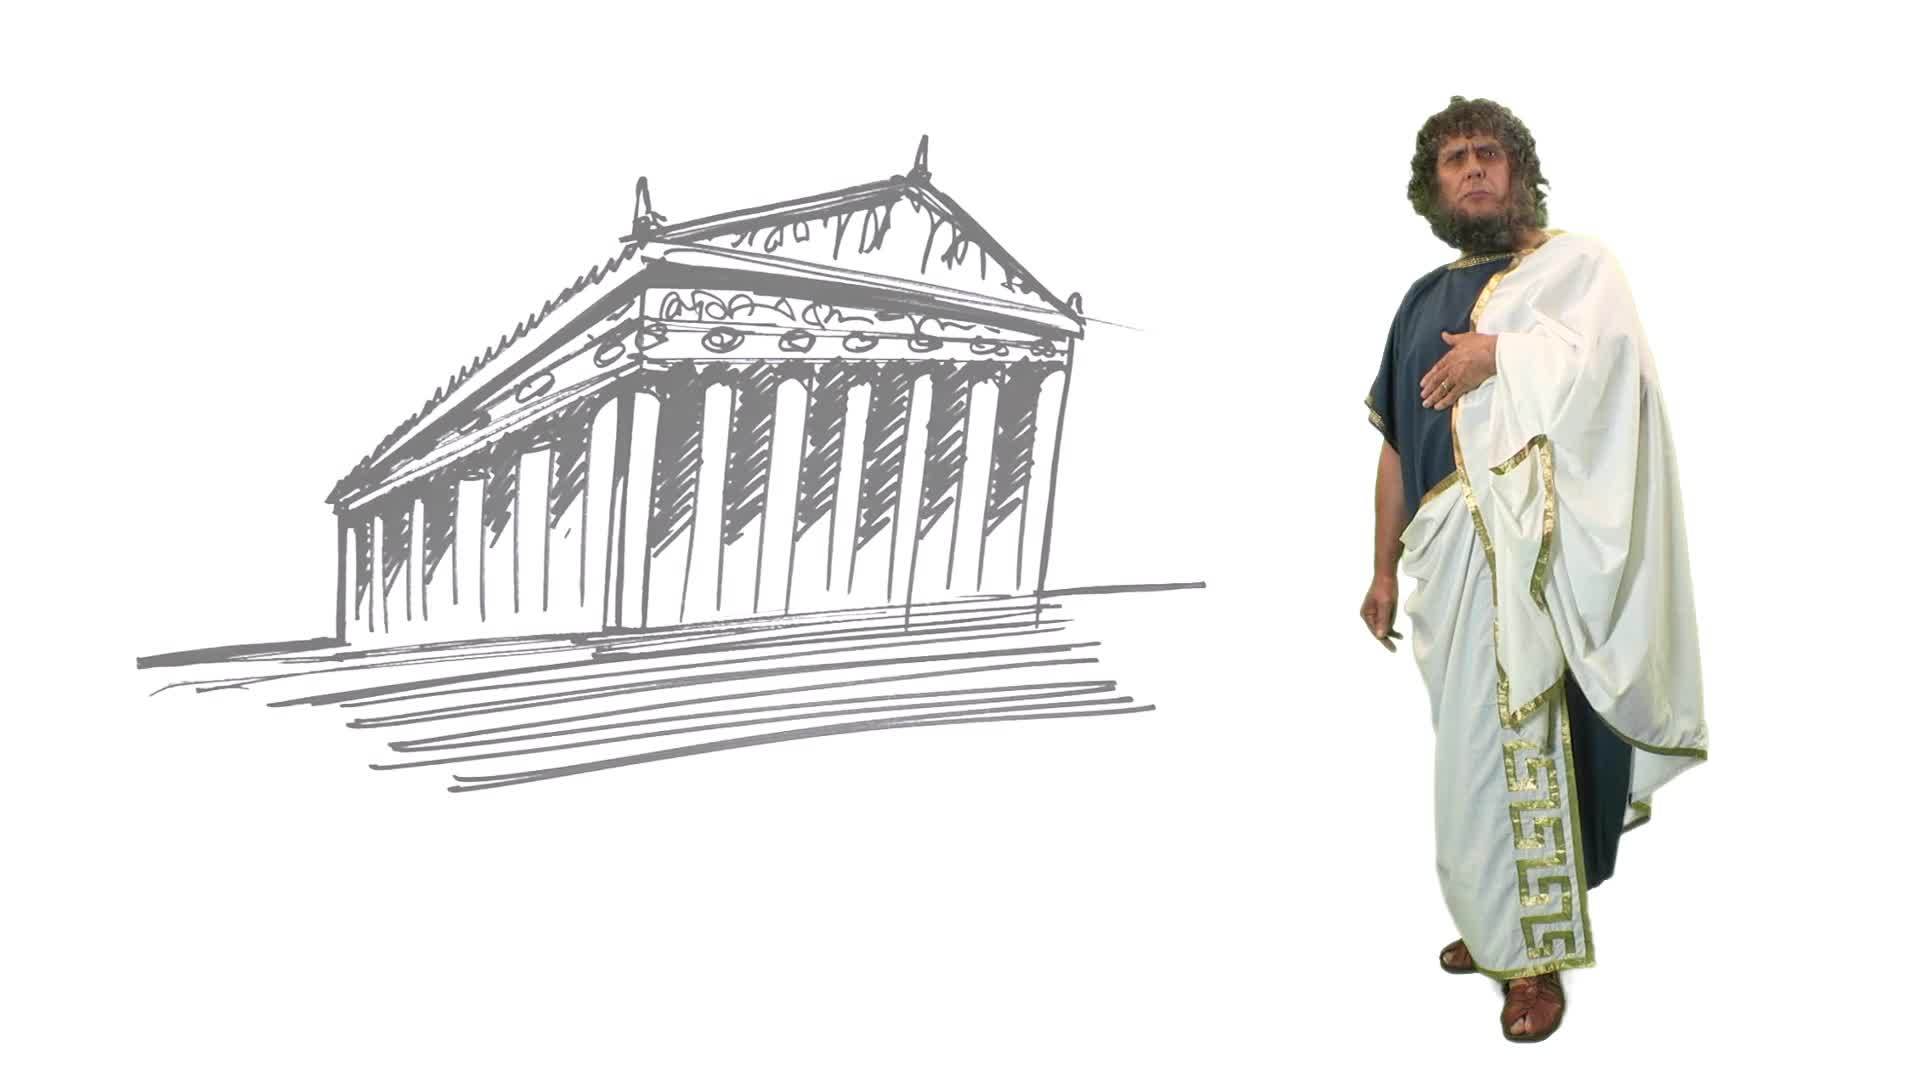 Democracy in Ancient Greece